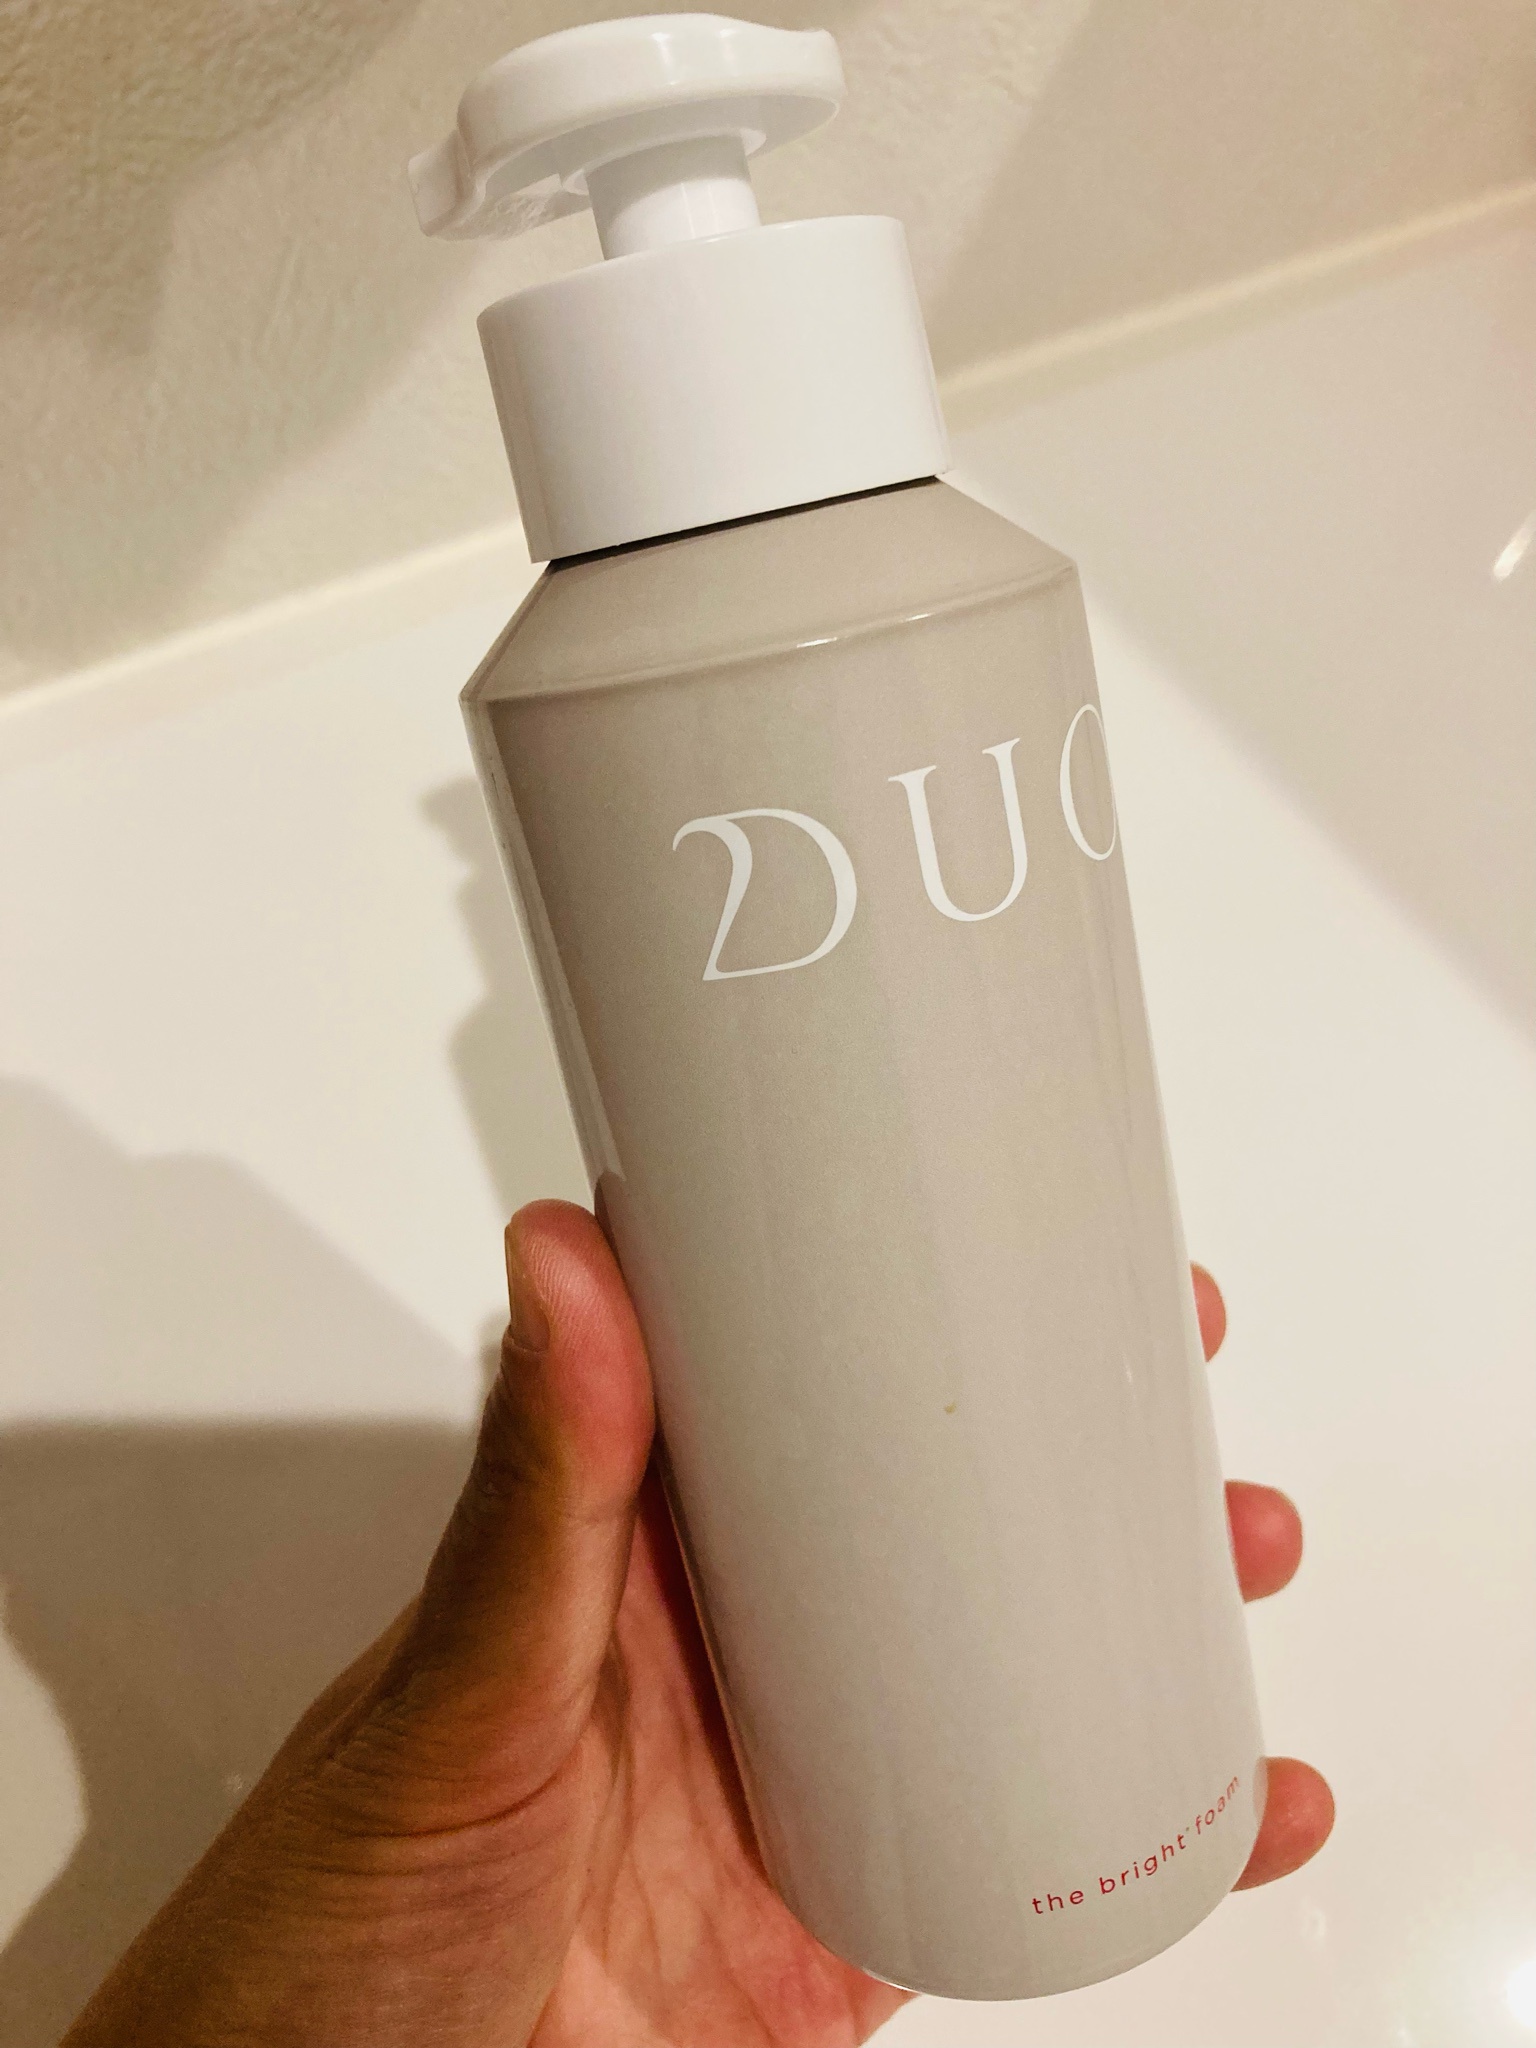 DUO(デュオ) / ザ ブライトフォームの公式商品情報｜美容・化粧品情報